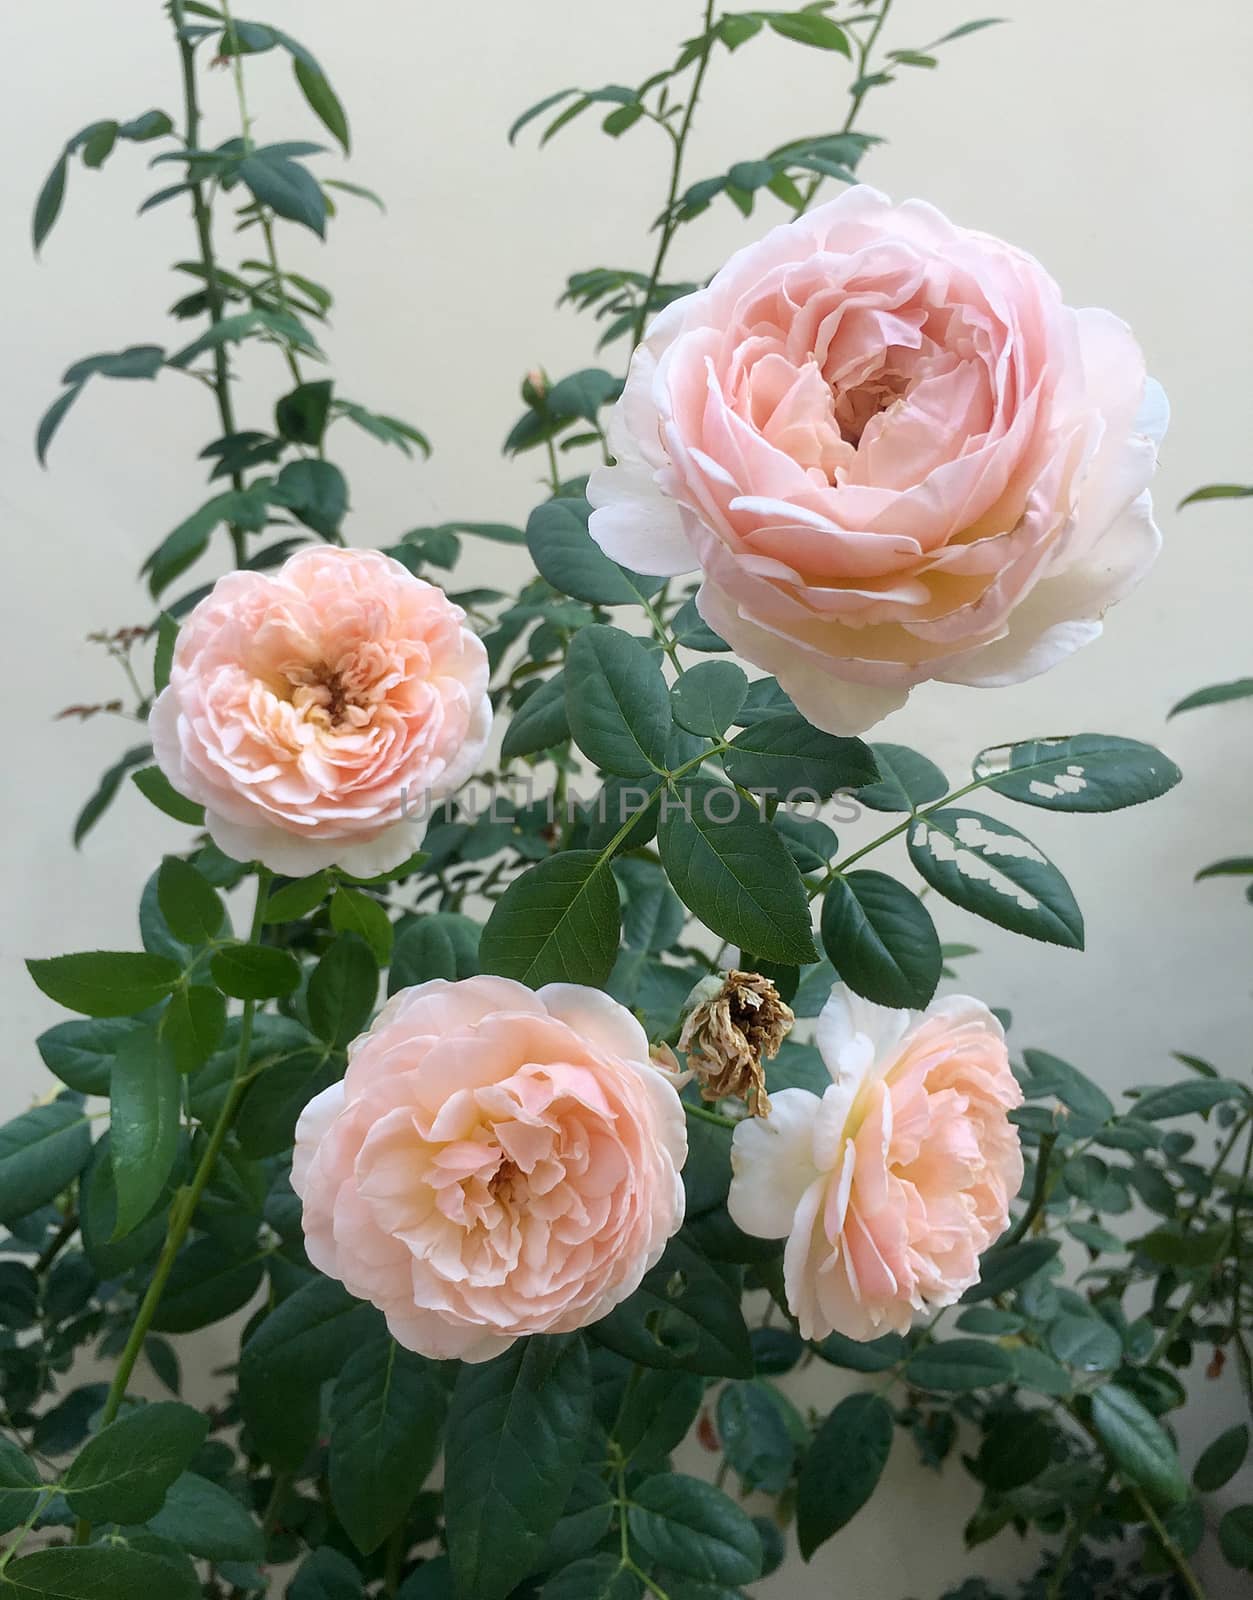 Beautiful English roses